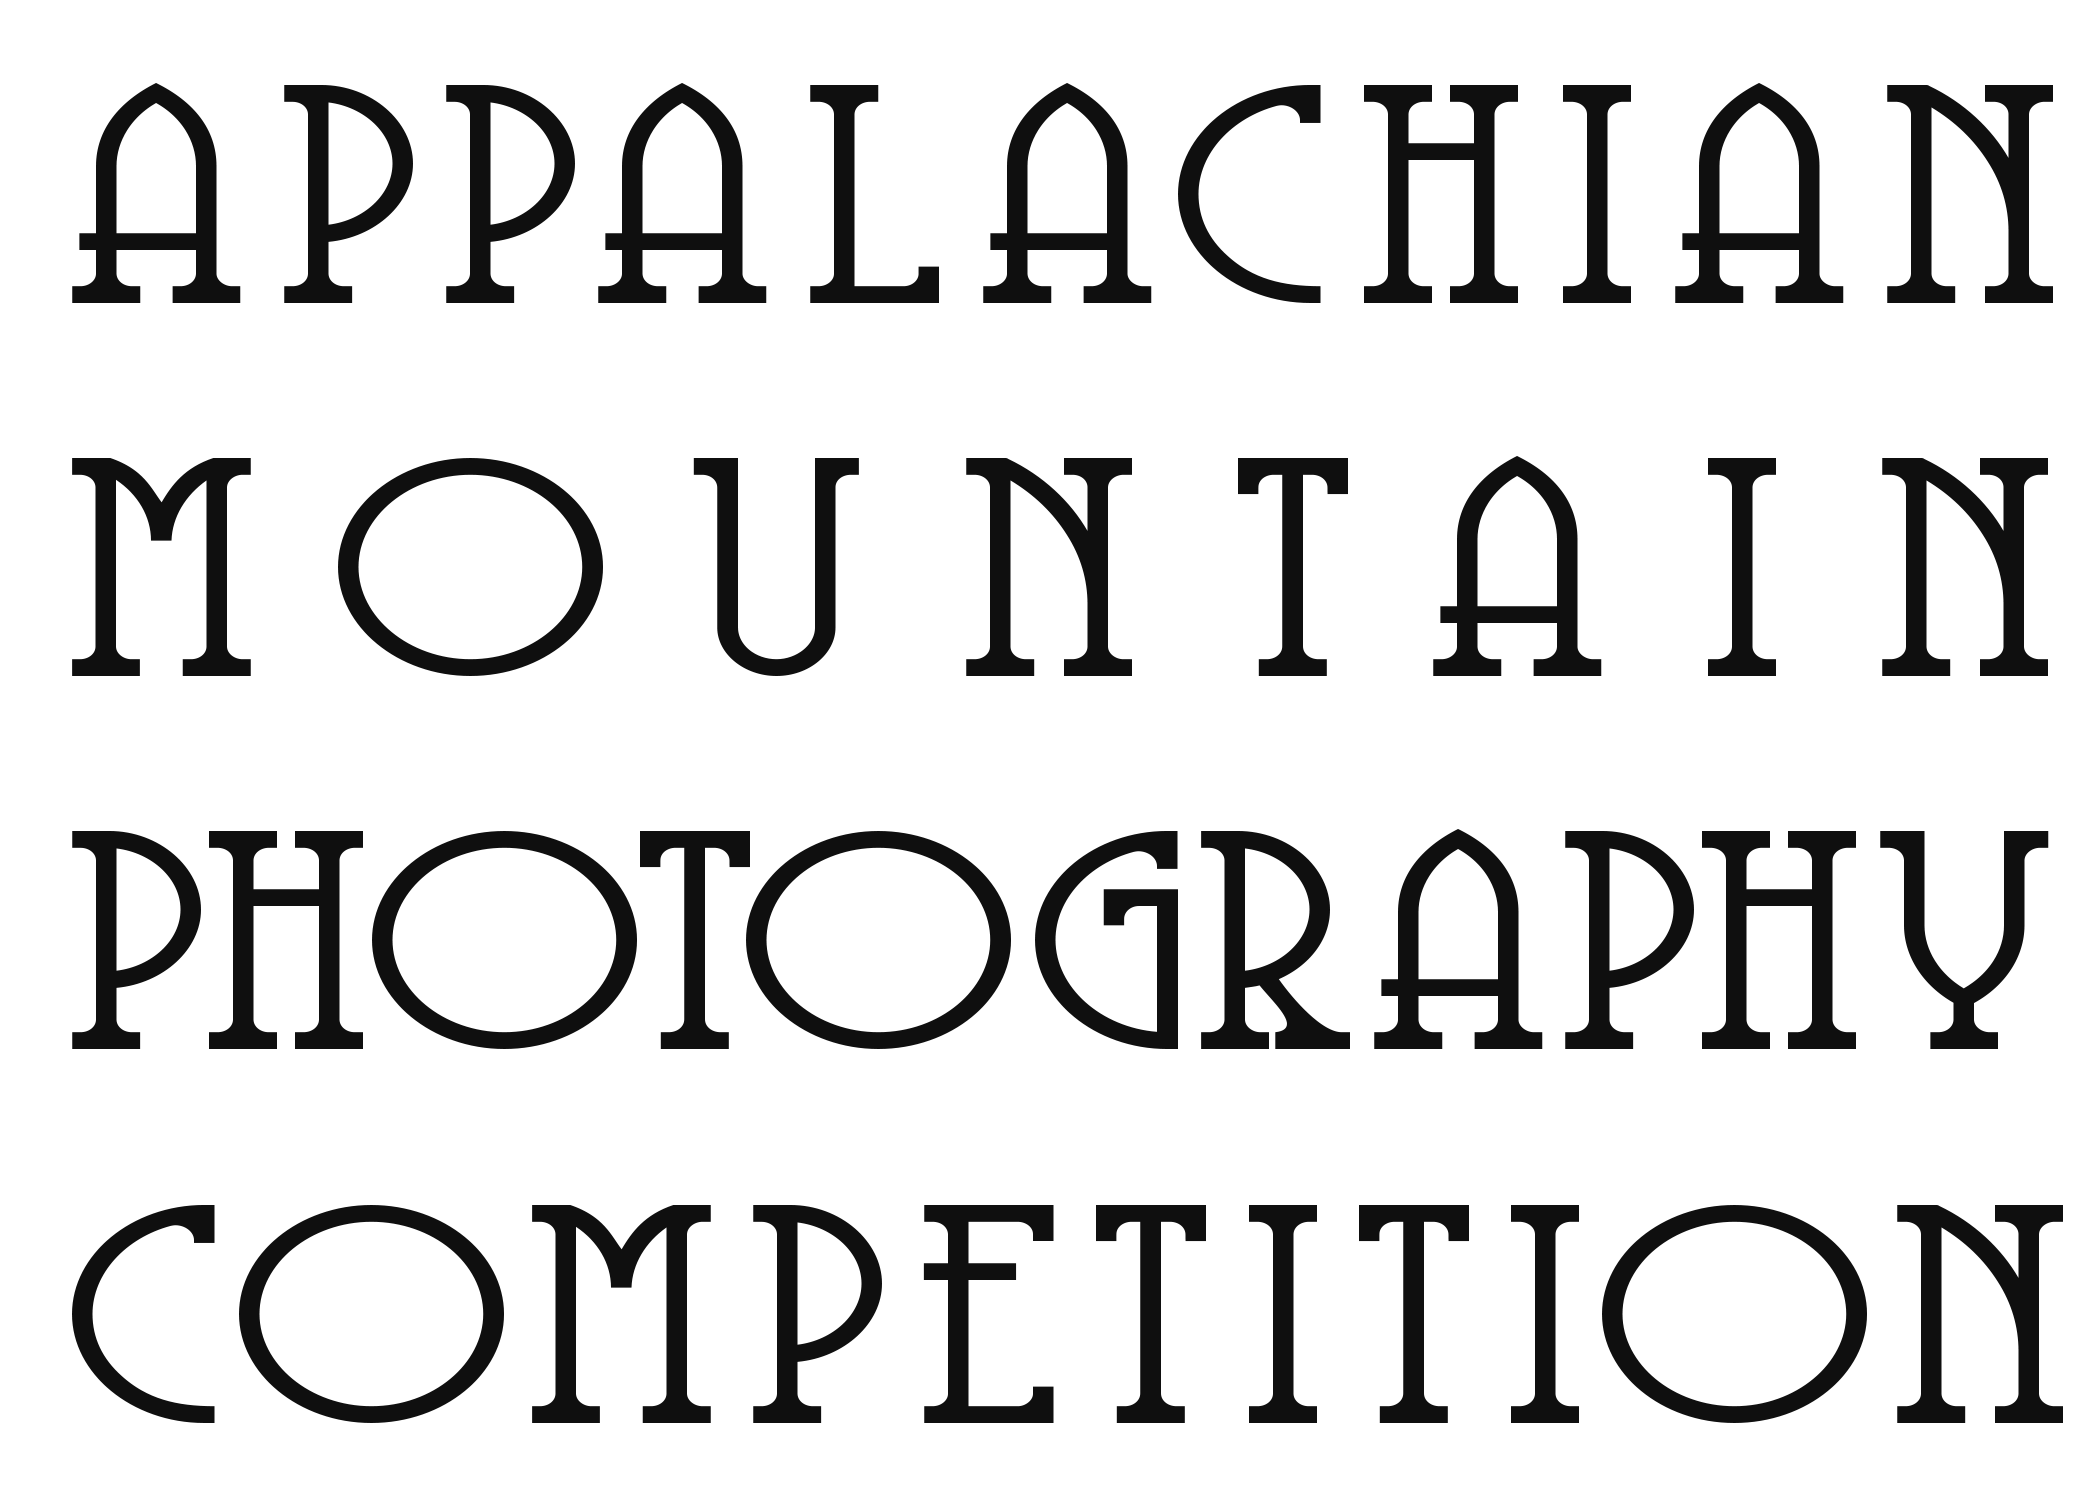 Appalachian Mountain Photography Competition logo